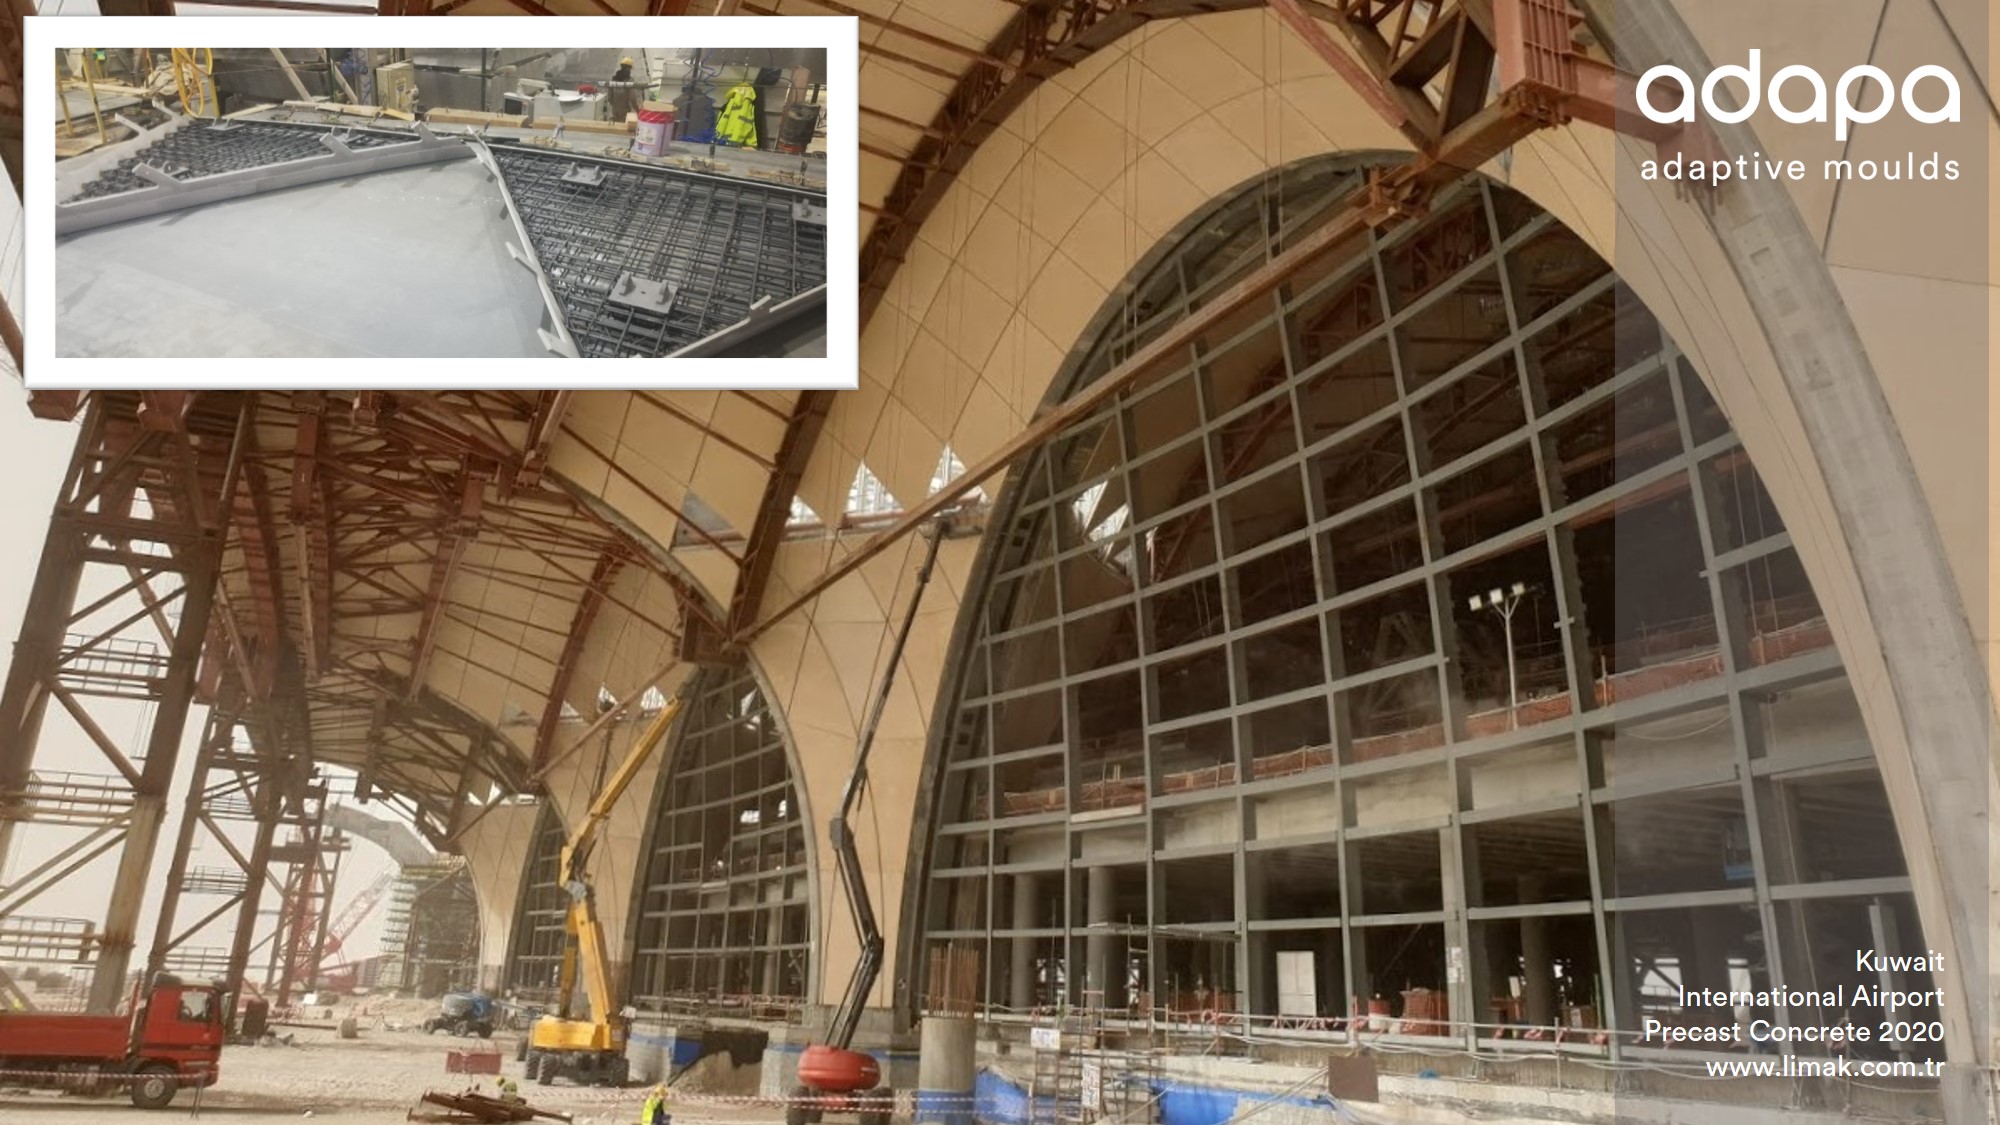 Kuwait International Airport Precast Concrete 2020